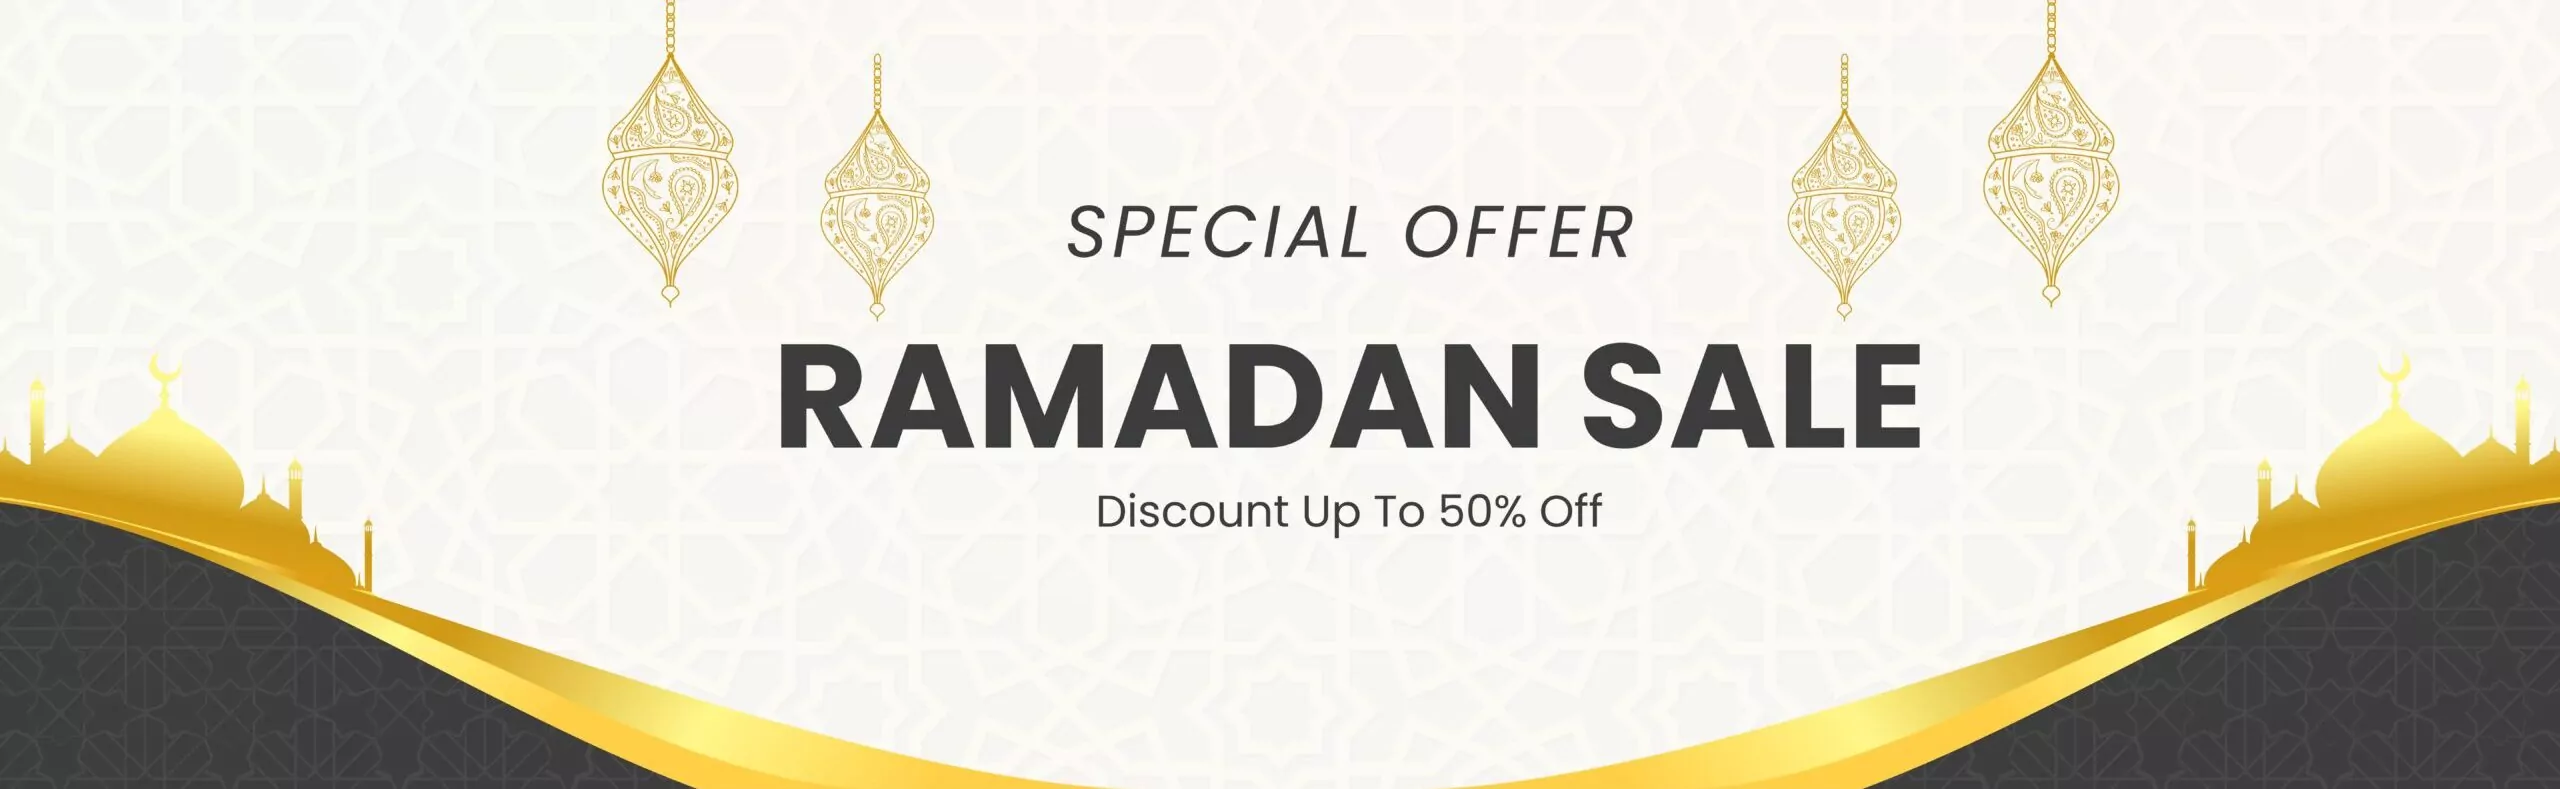 ramadan-sale-page